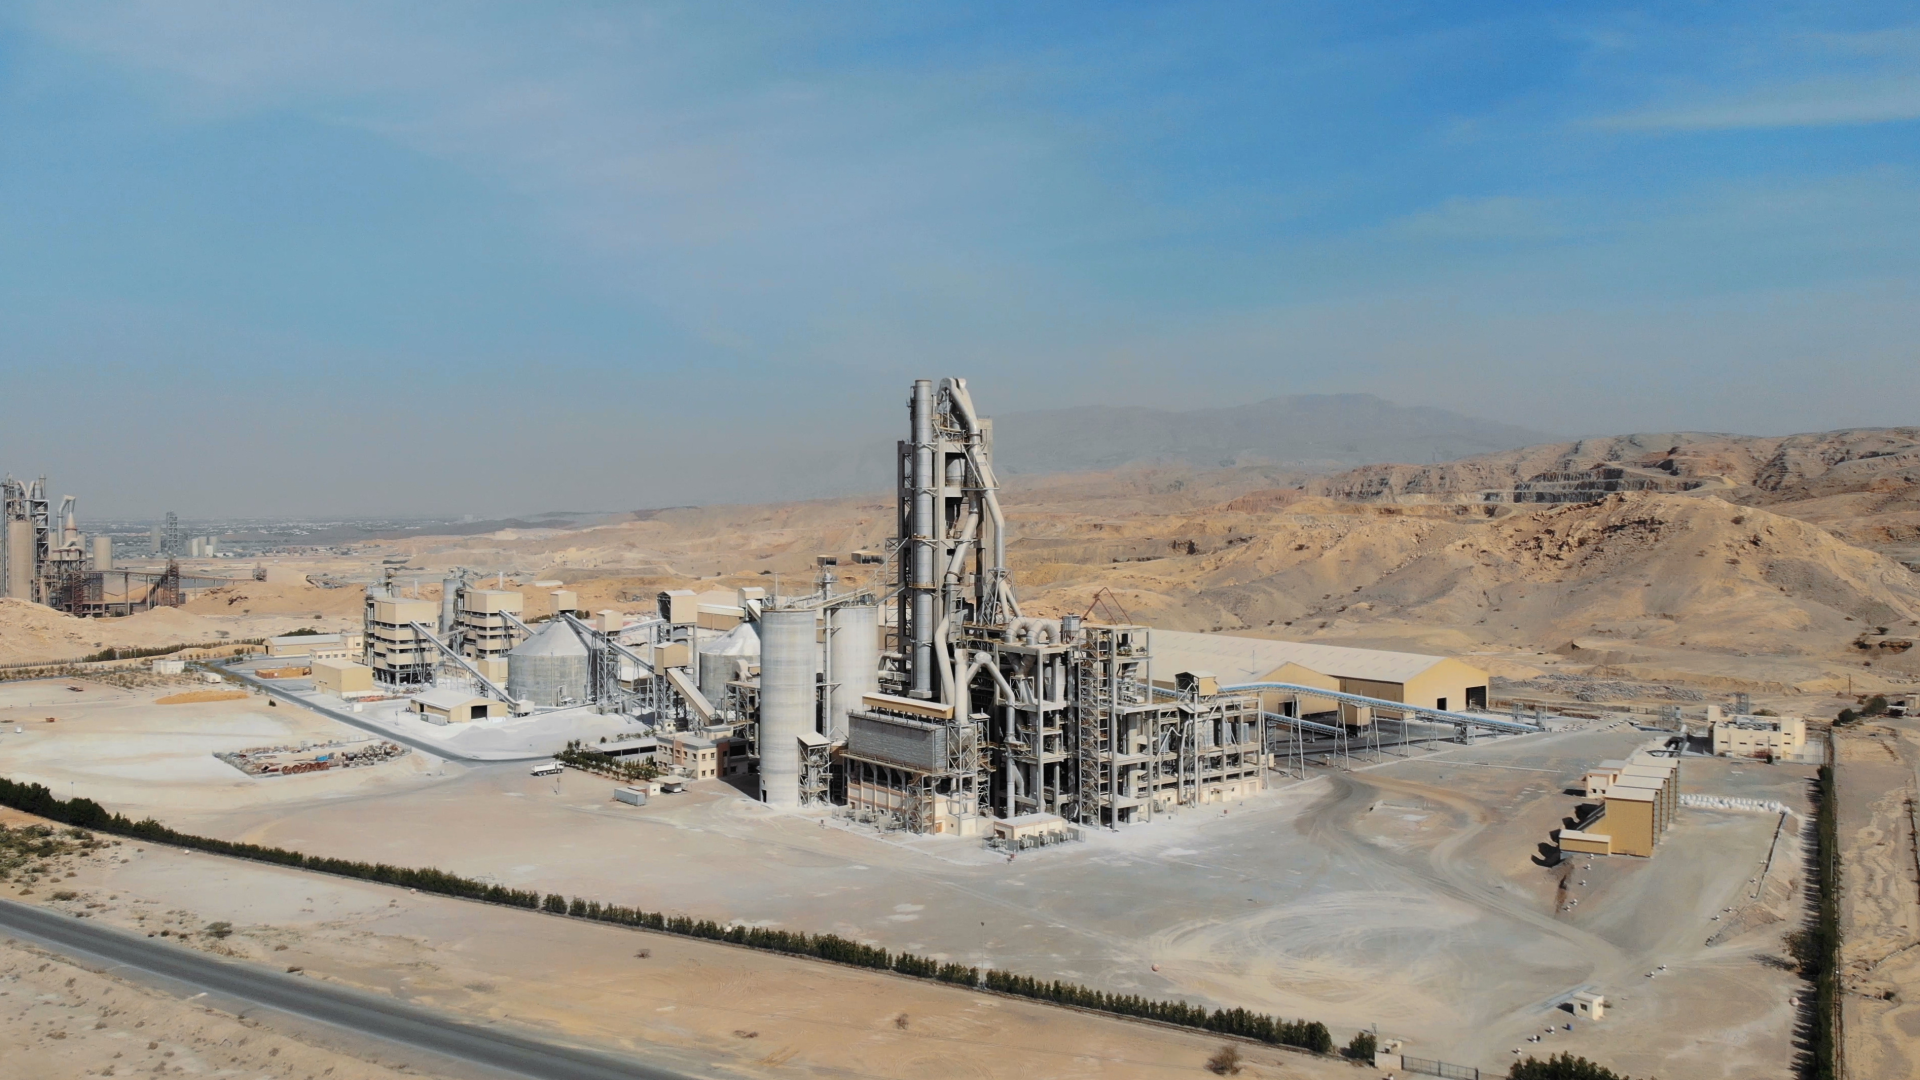 Cement Plants & Factories, UAE: Fenceline Air Pollution Monitoring